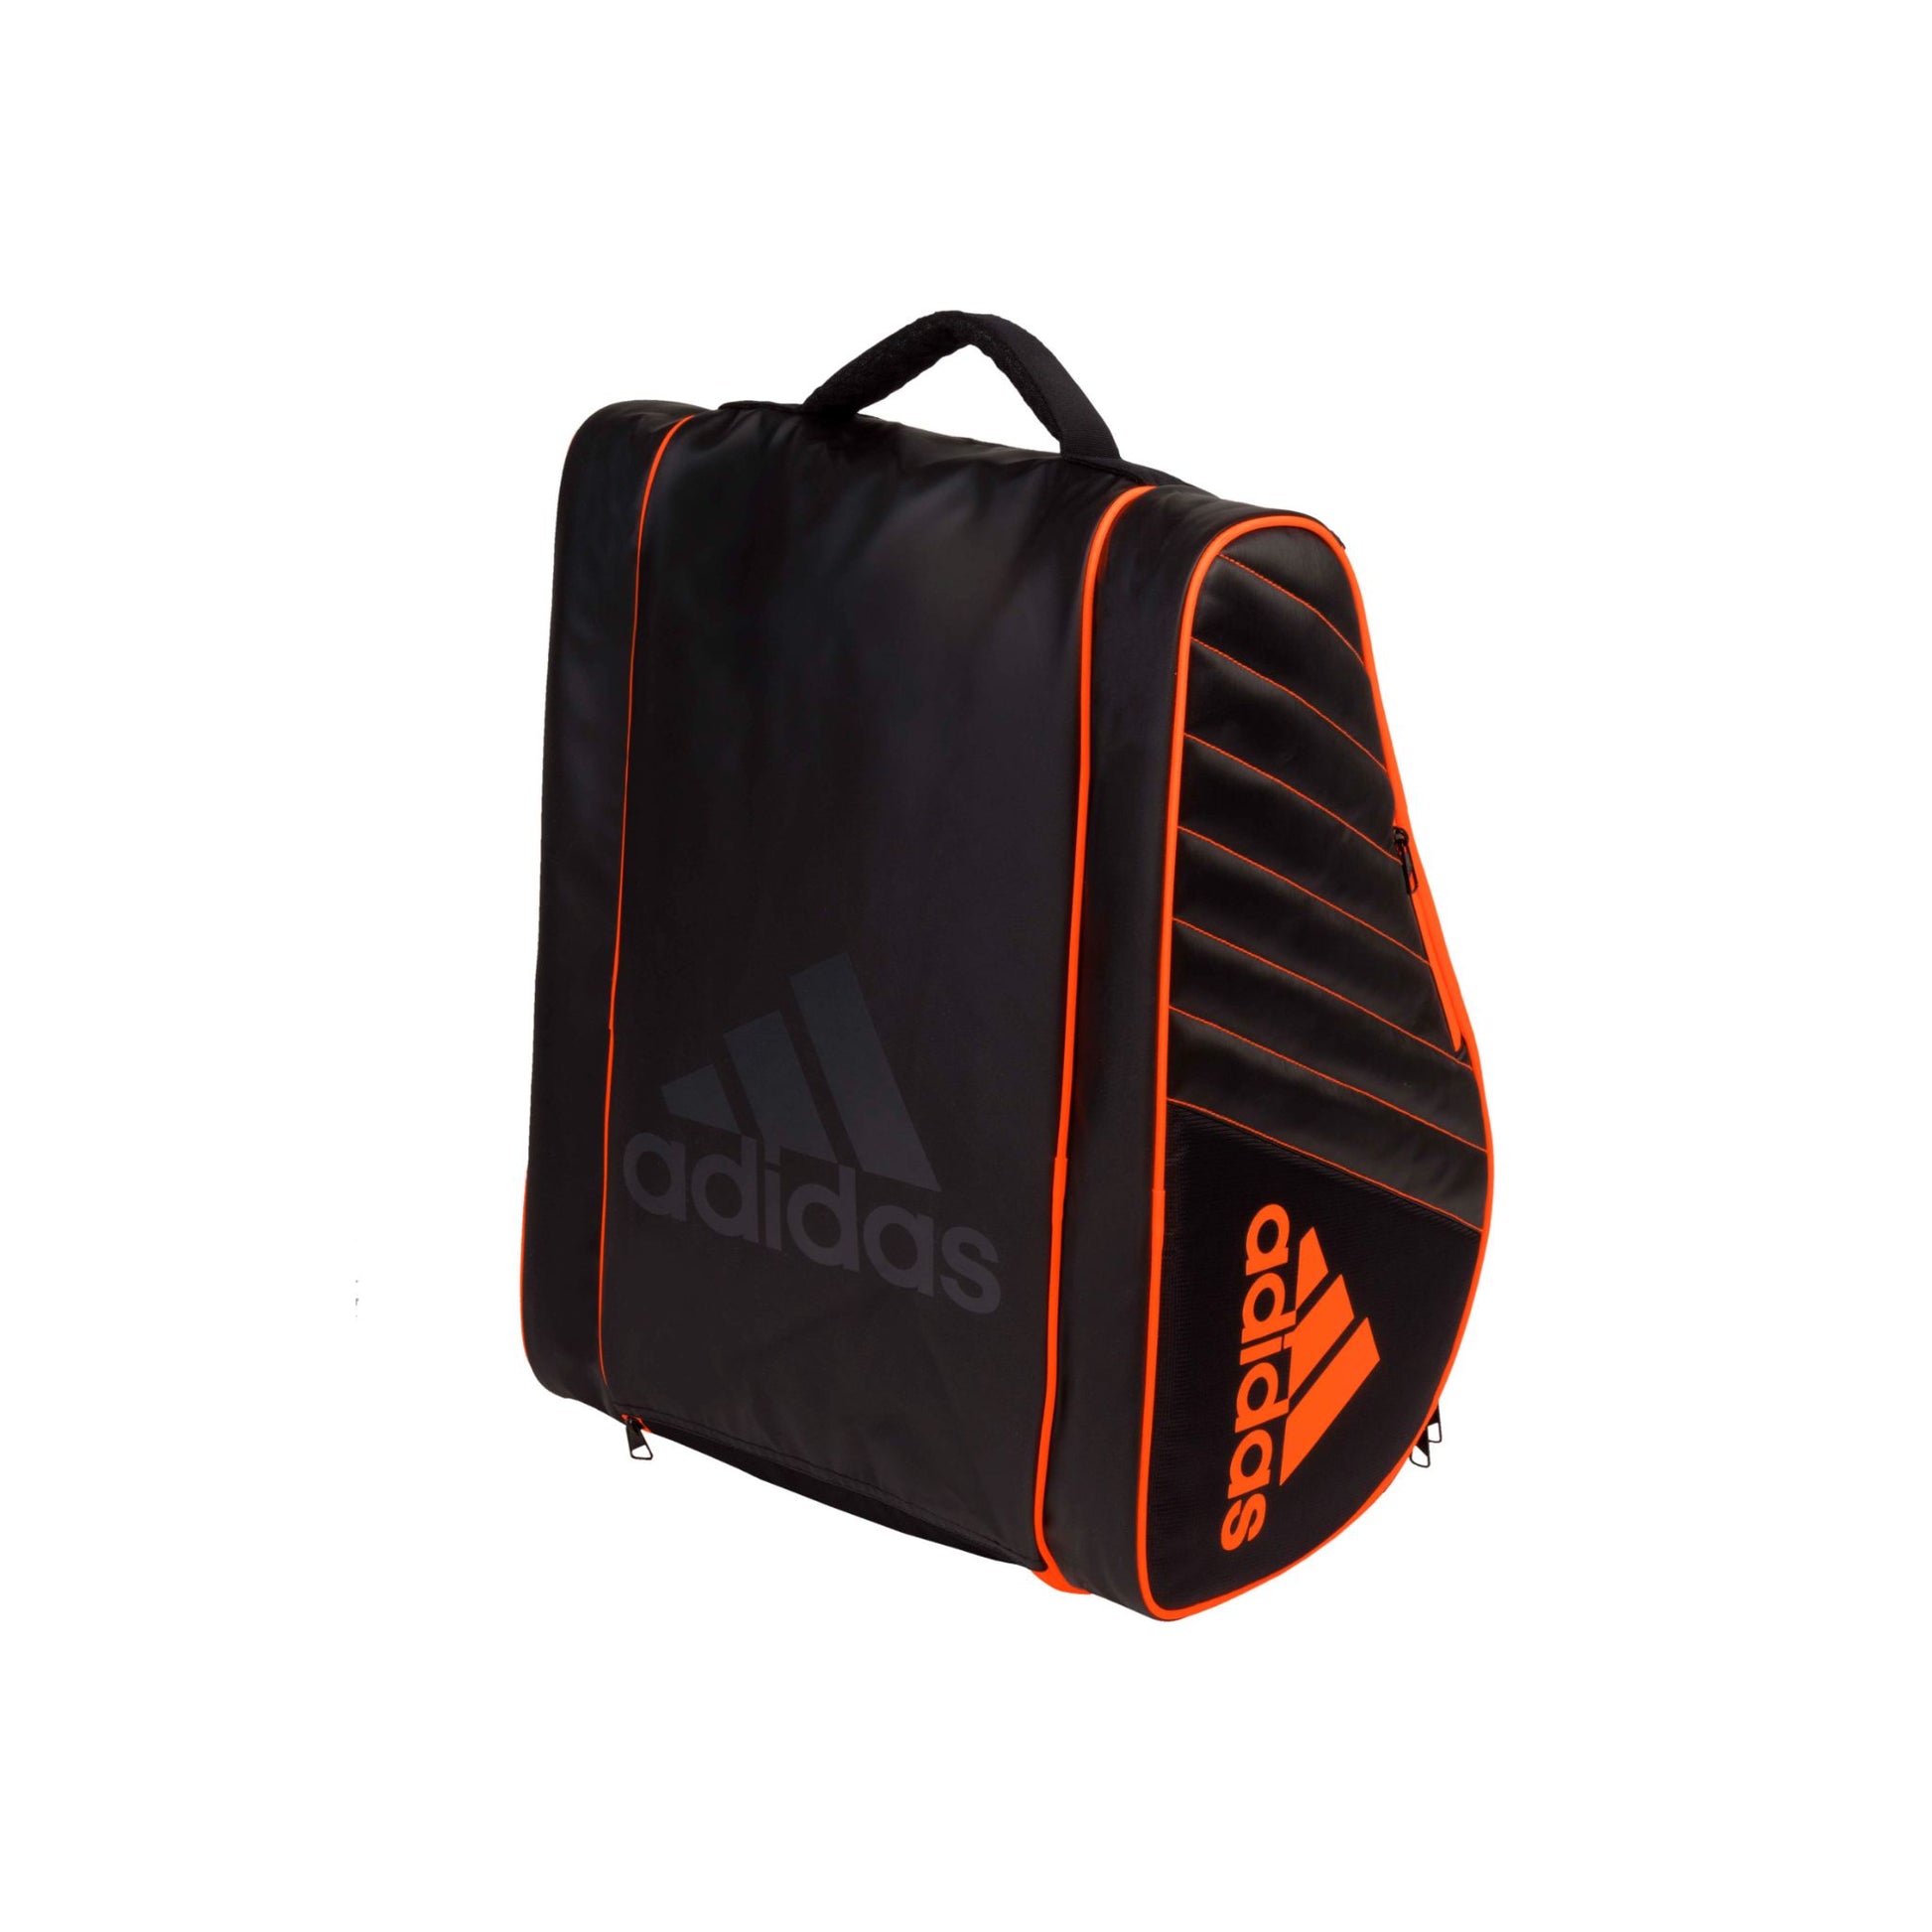 Adidas Protour Racket Bag - Orange-Bottom